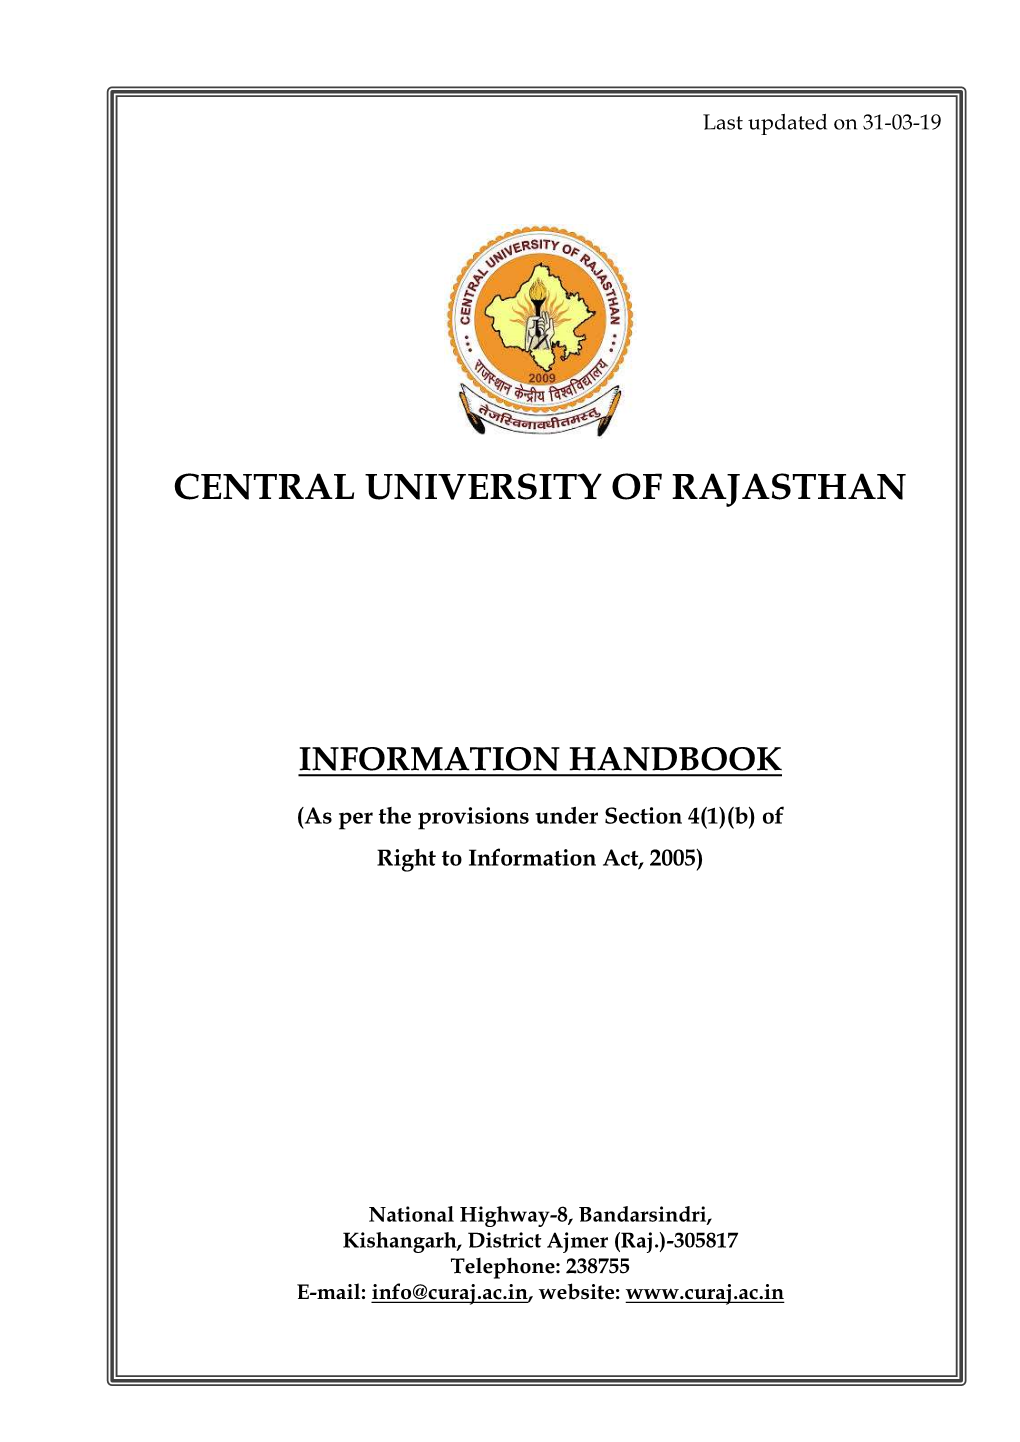 Central University of Rajasthan Information Handbook